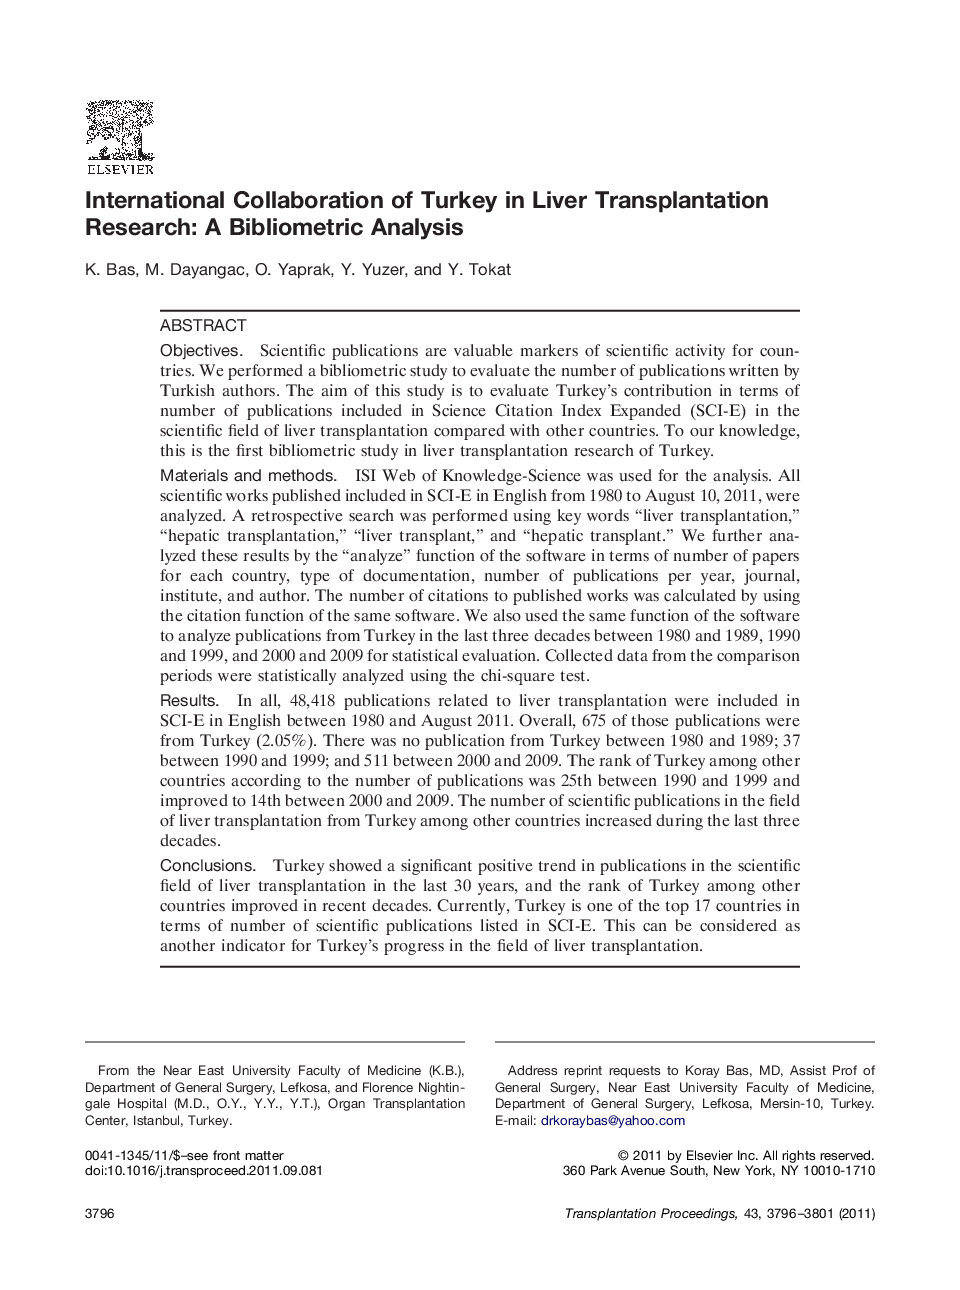 International Collaboration of Turkey in Liver Transplantation Research: A Bibliometric Analysis